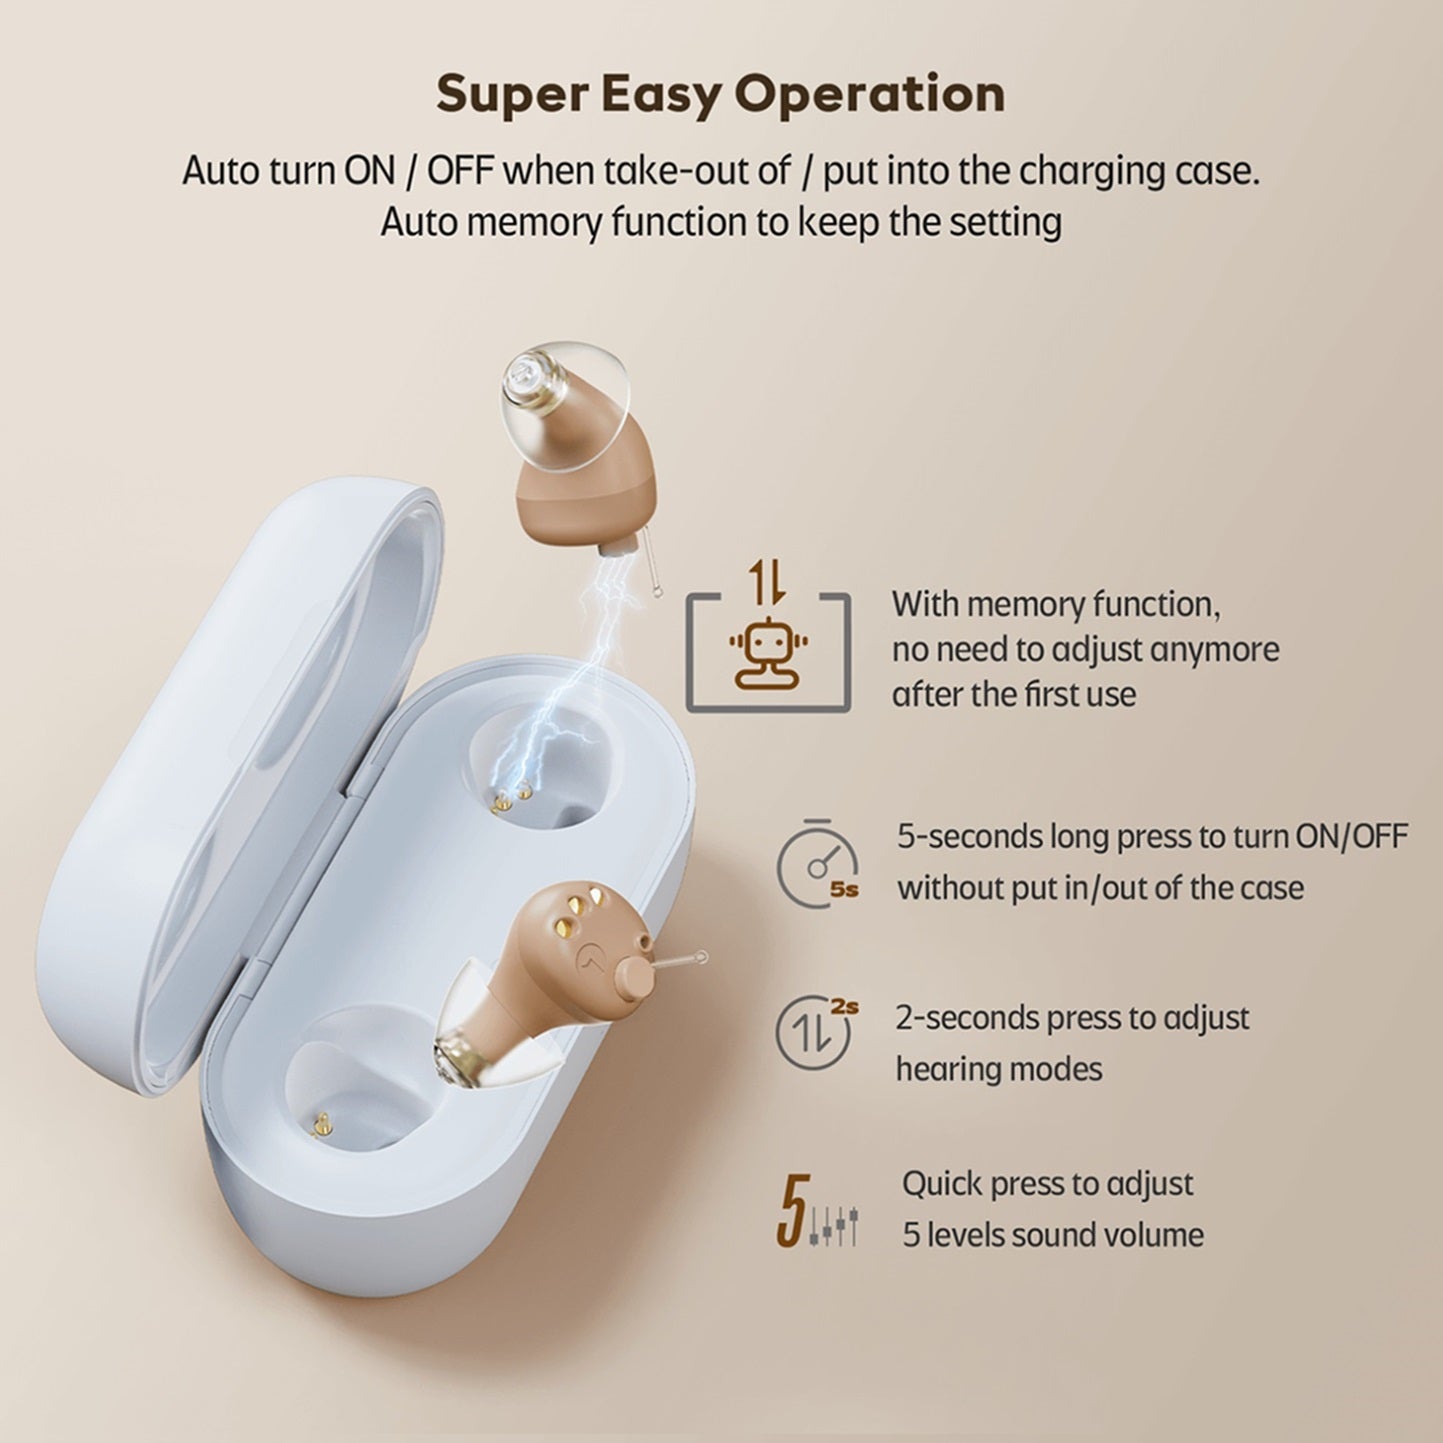 Vivtone Supermini-b CIC hearing aids